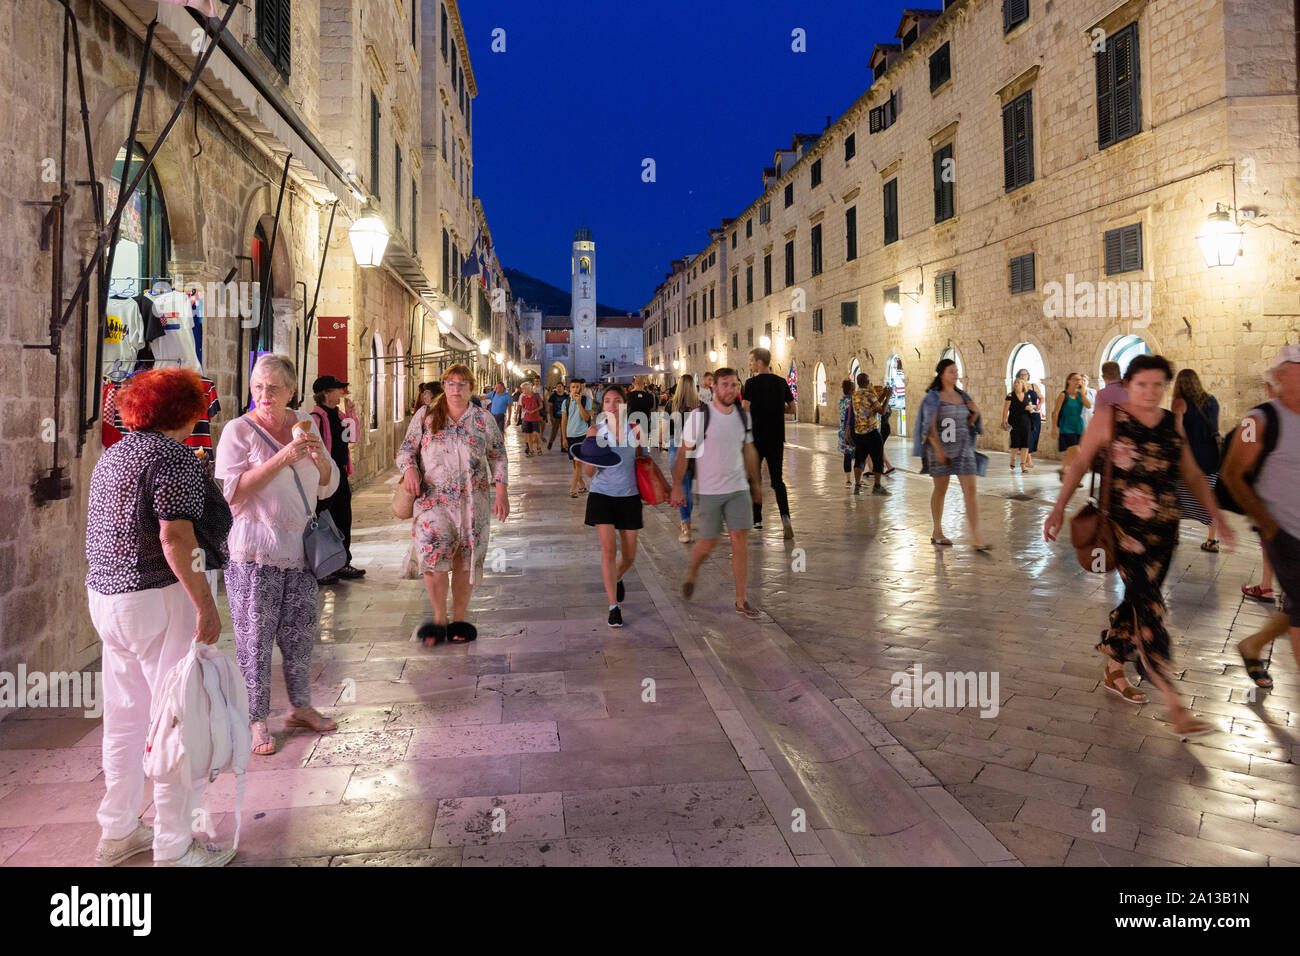 Dubrovnik street scene - people walking on the Stradun, main street at night, Dubrovnik old town UNESCO World Heritage site, Dubrovnik  Croatia Europe Stock Photo